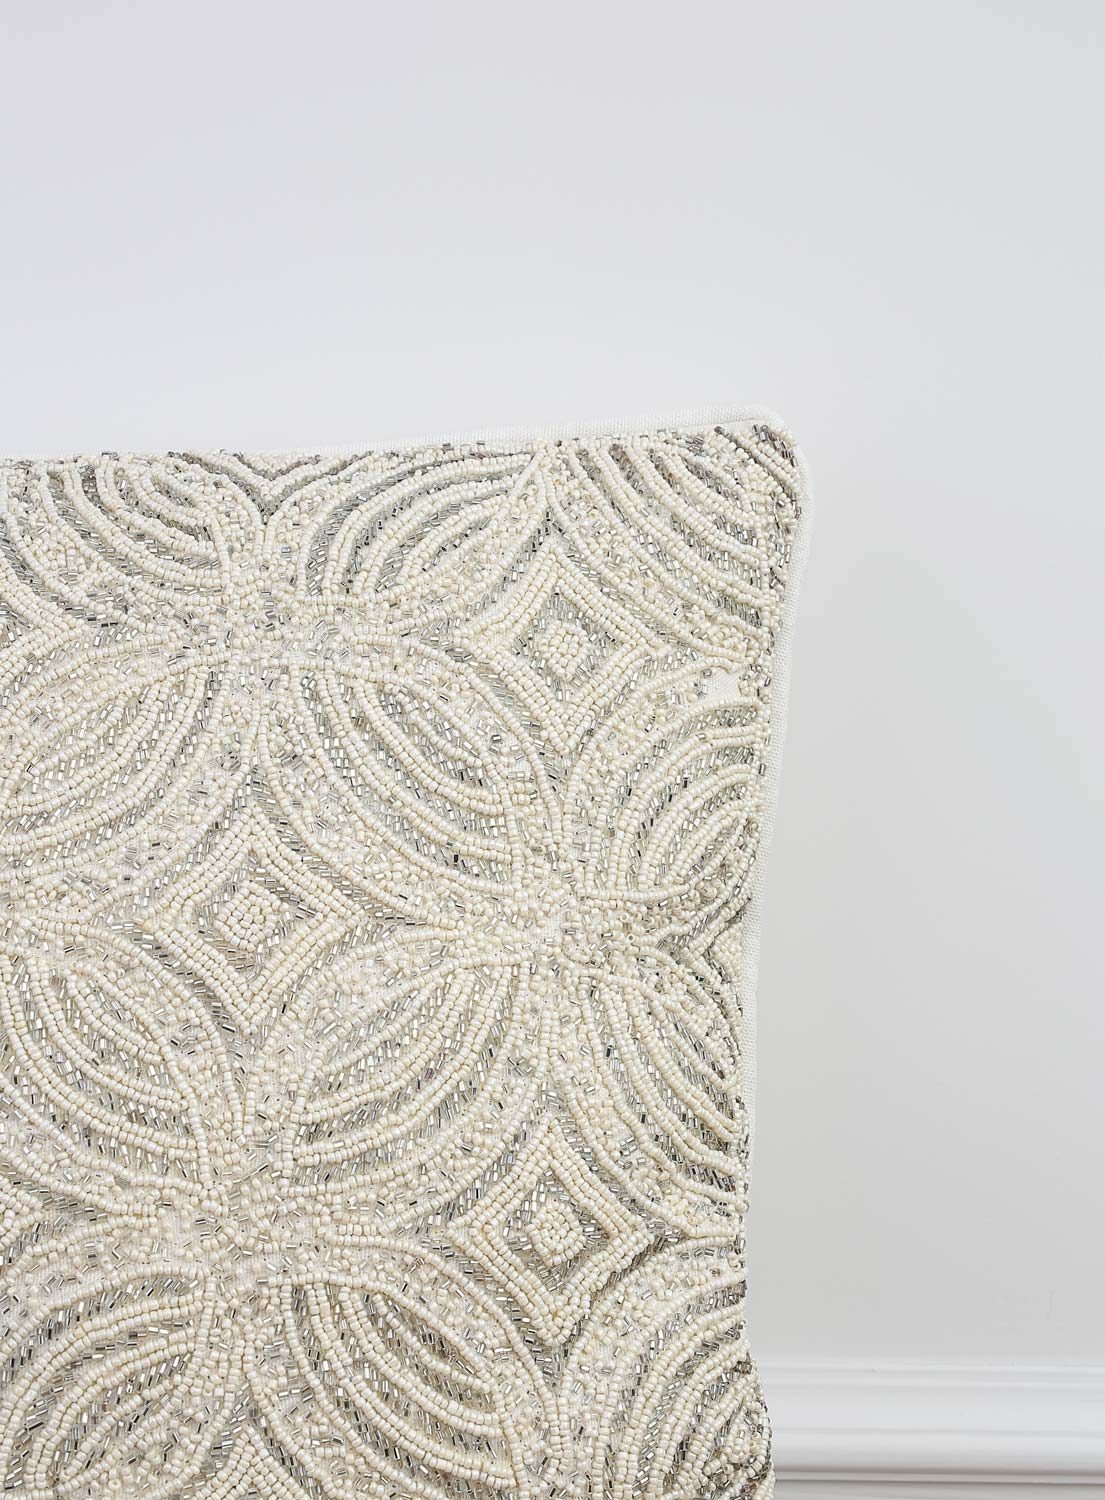 Cream-colored pillow w / embroidery 45x45cm